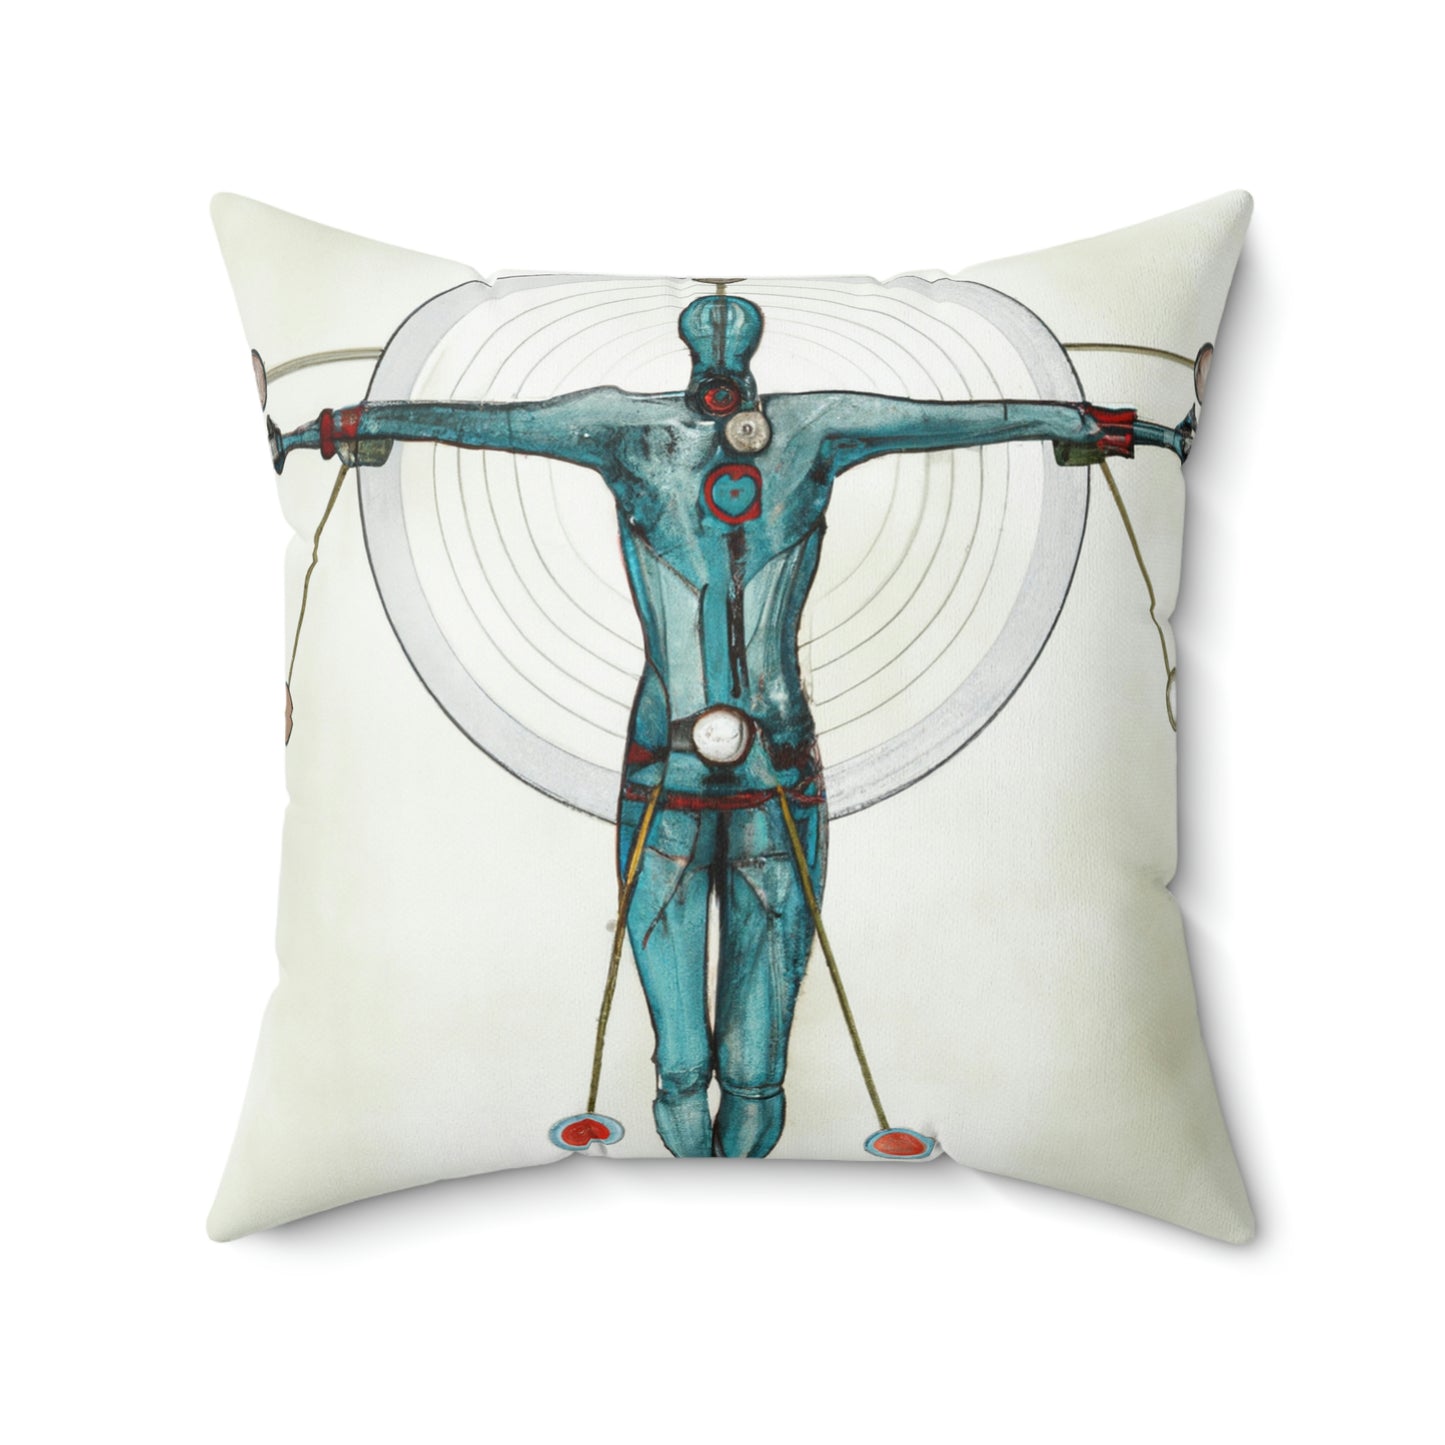 Vitruvian Bot Decorative Polyester Square Pillow